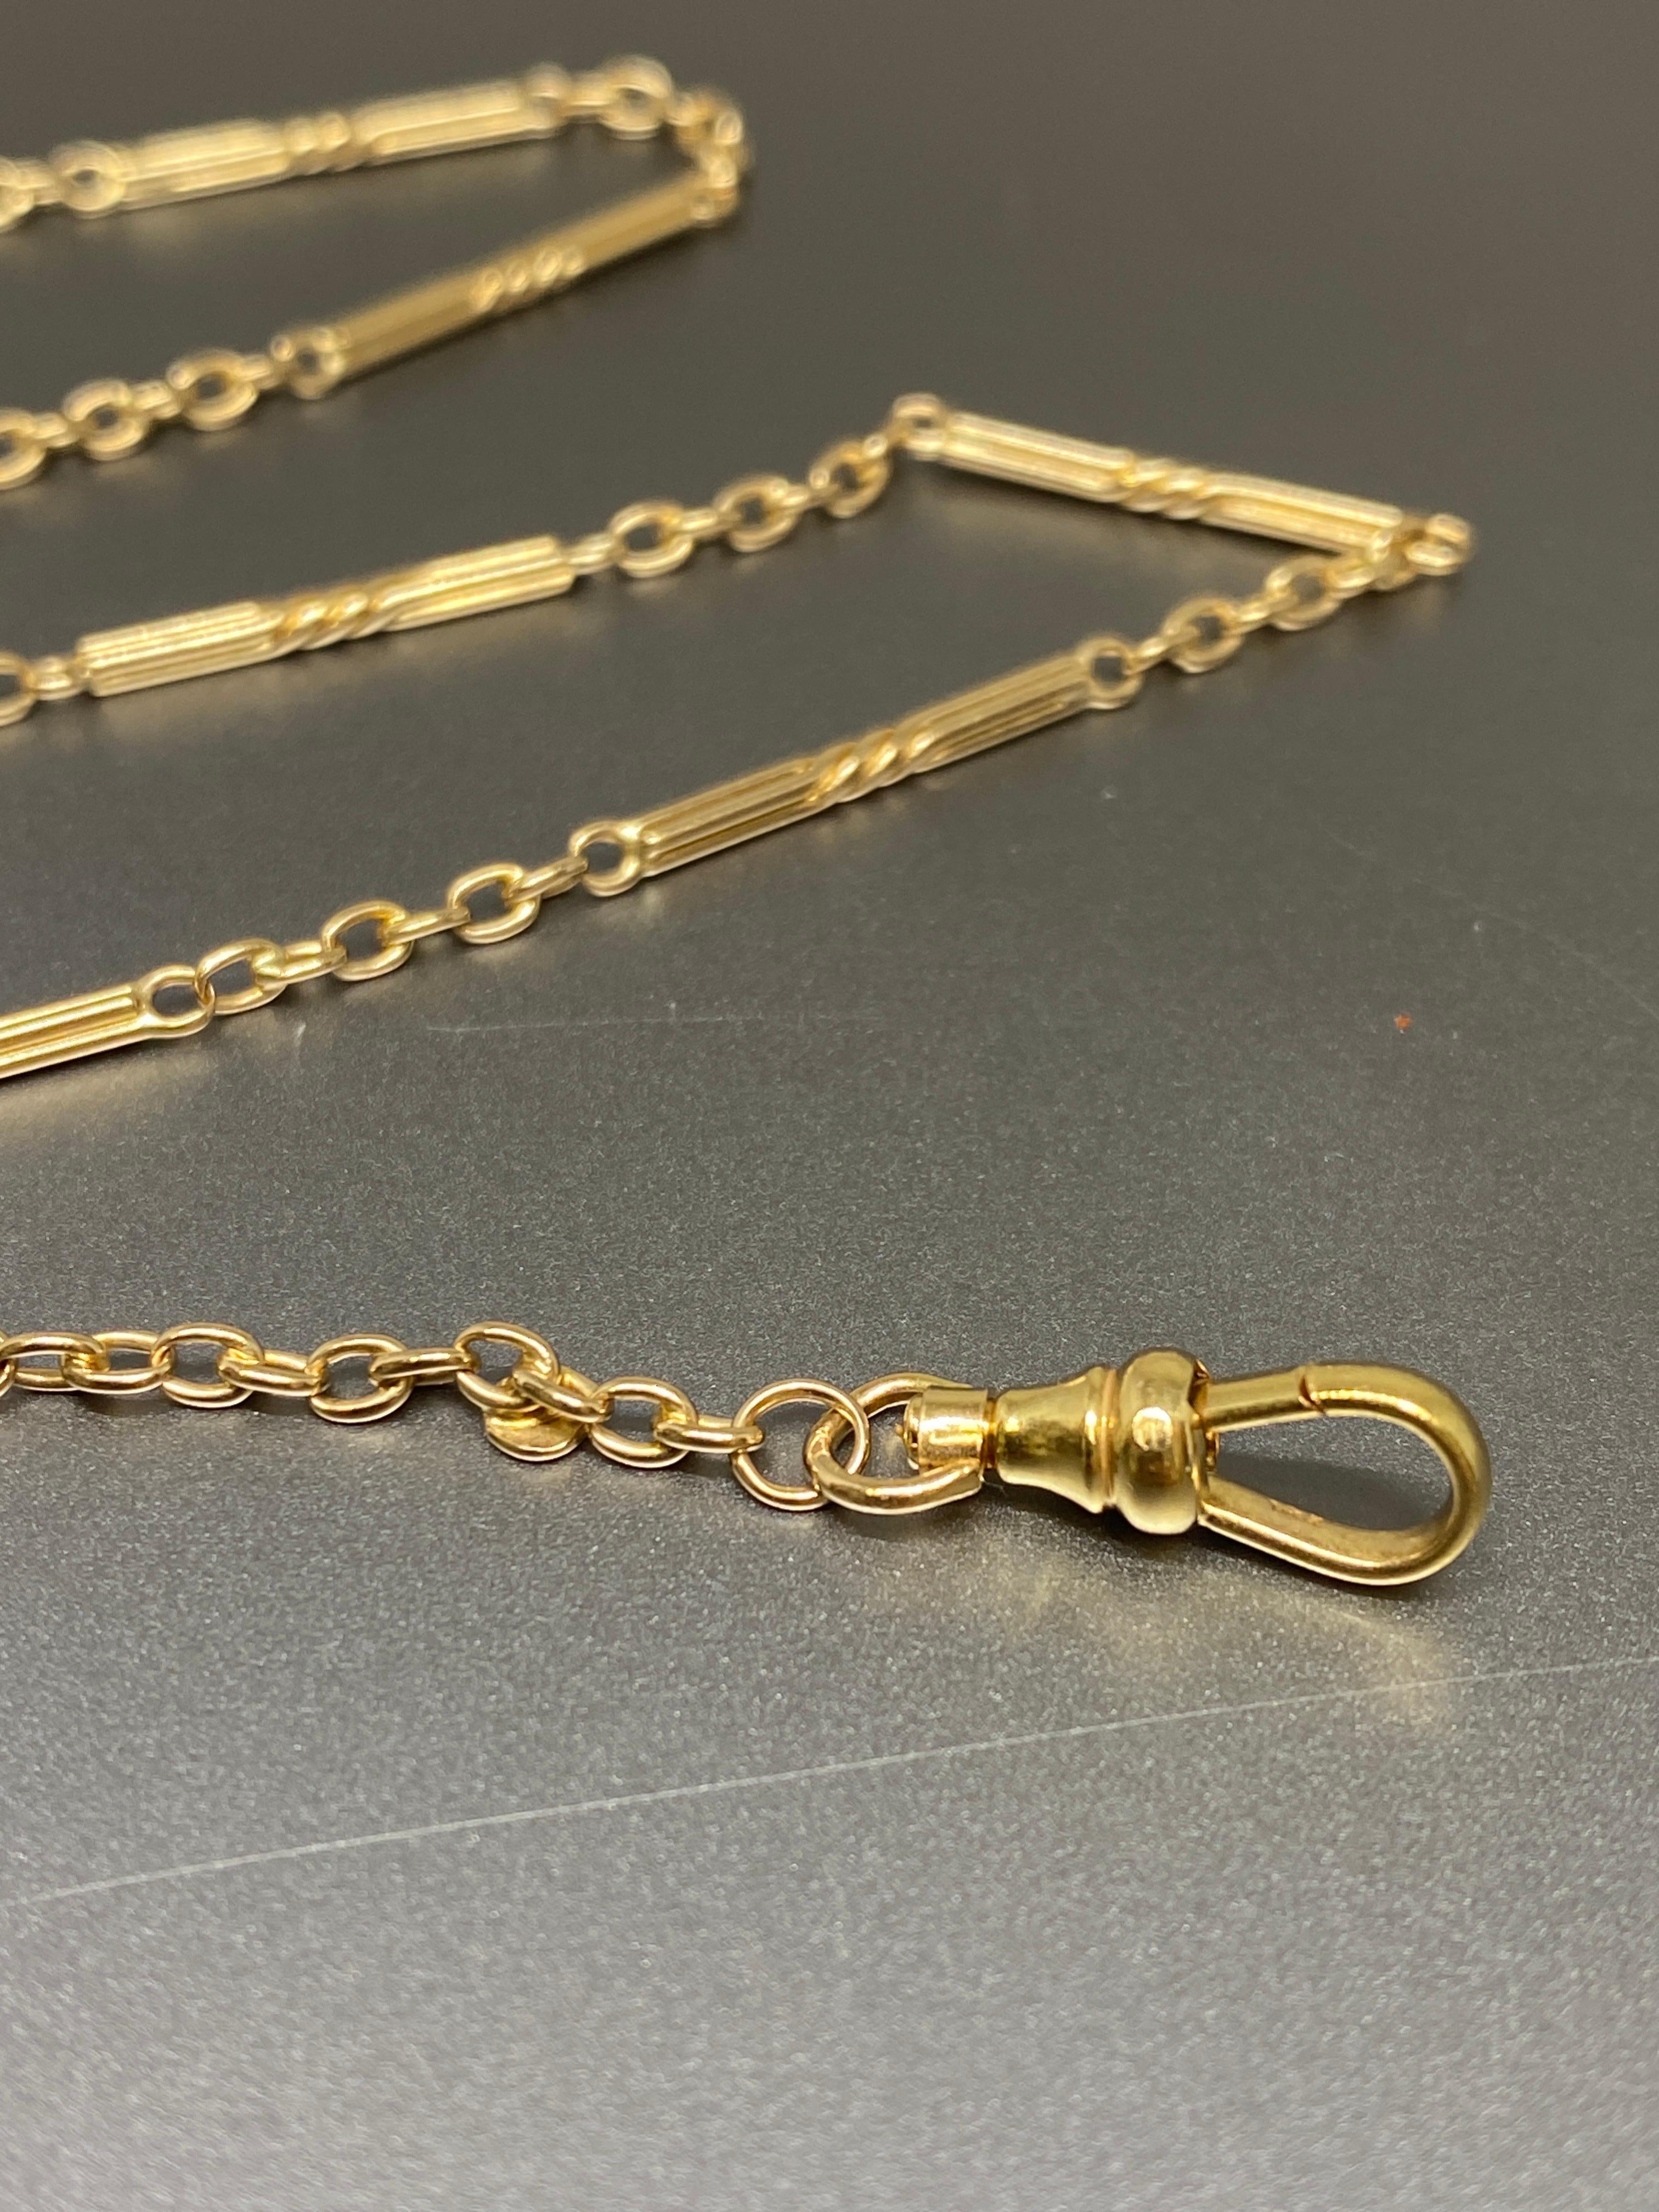 Antique Art Deco 14k Yellow Gold Watch Fob Chain Necklace Bracelet 1